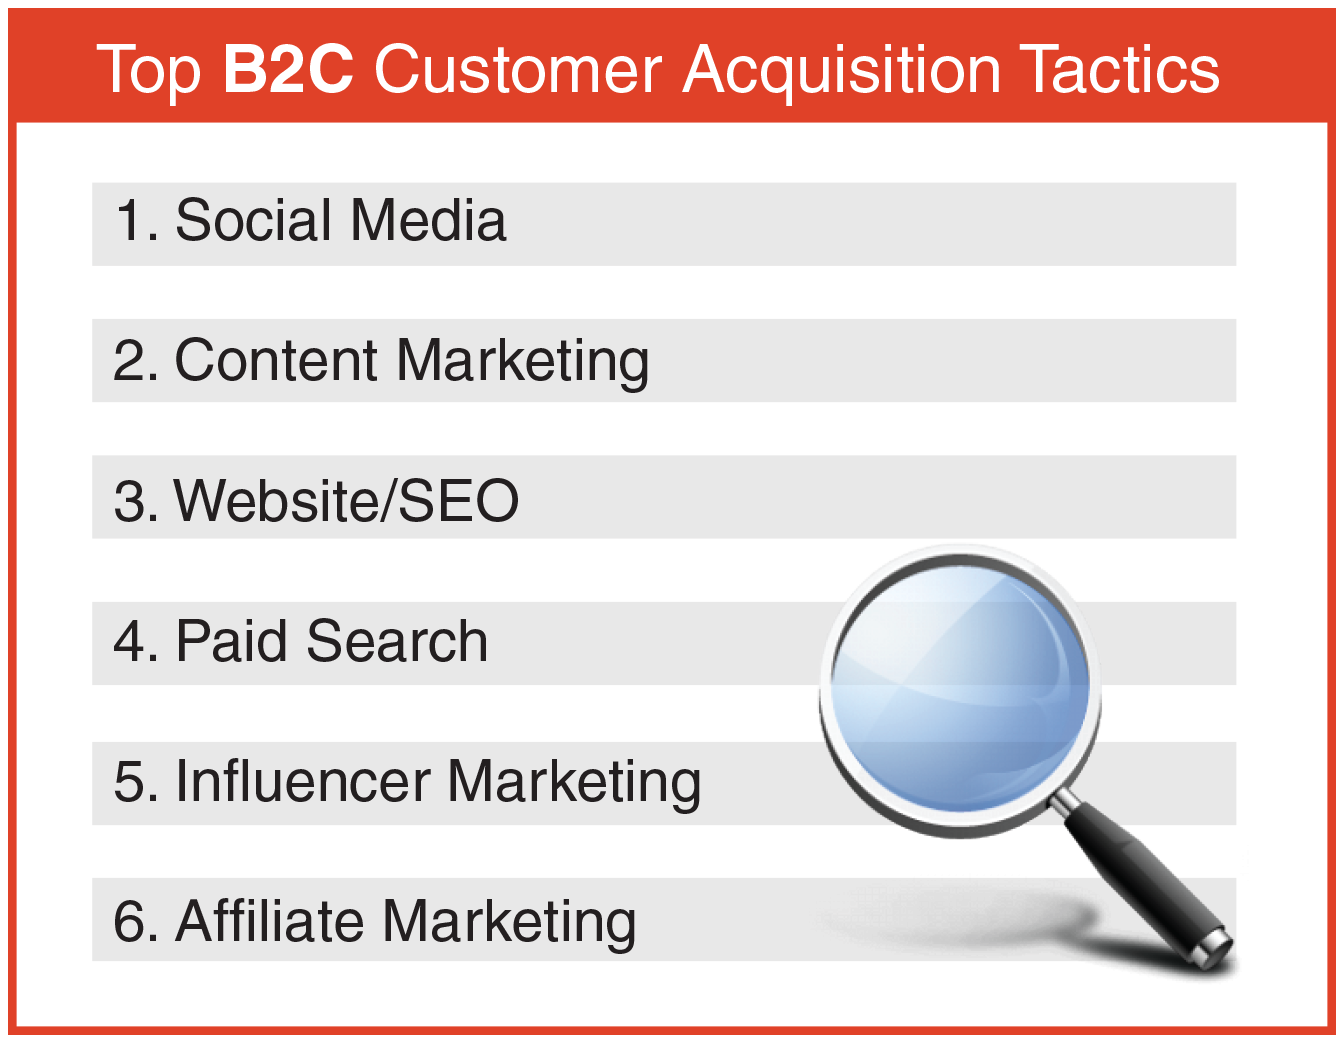 B2C Customer Acquisition Tactics